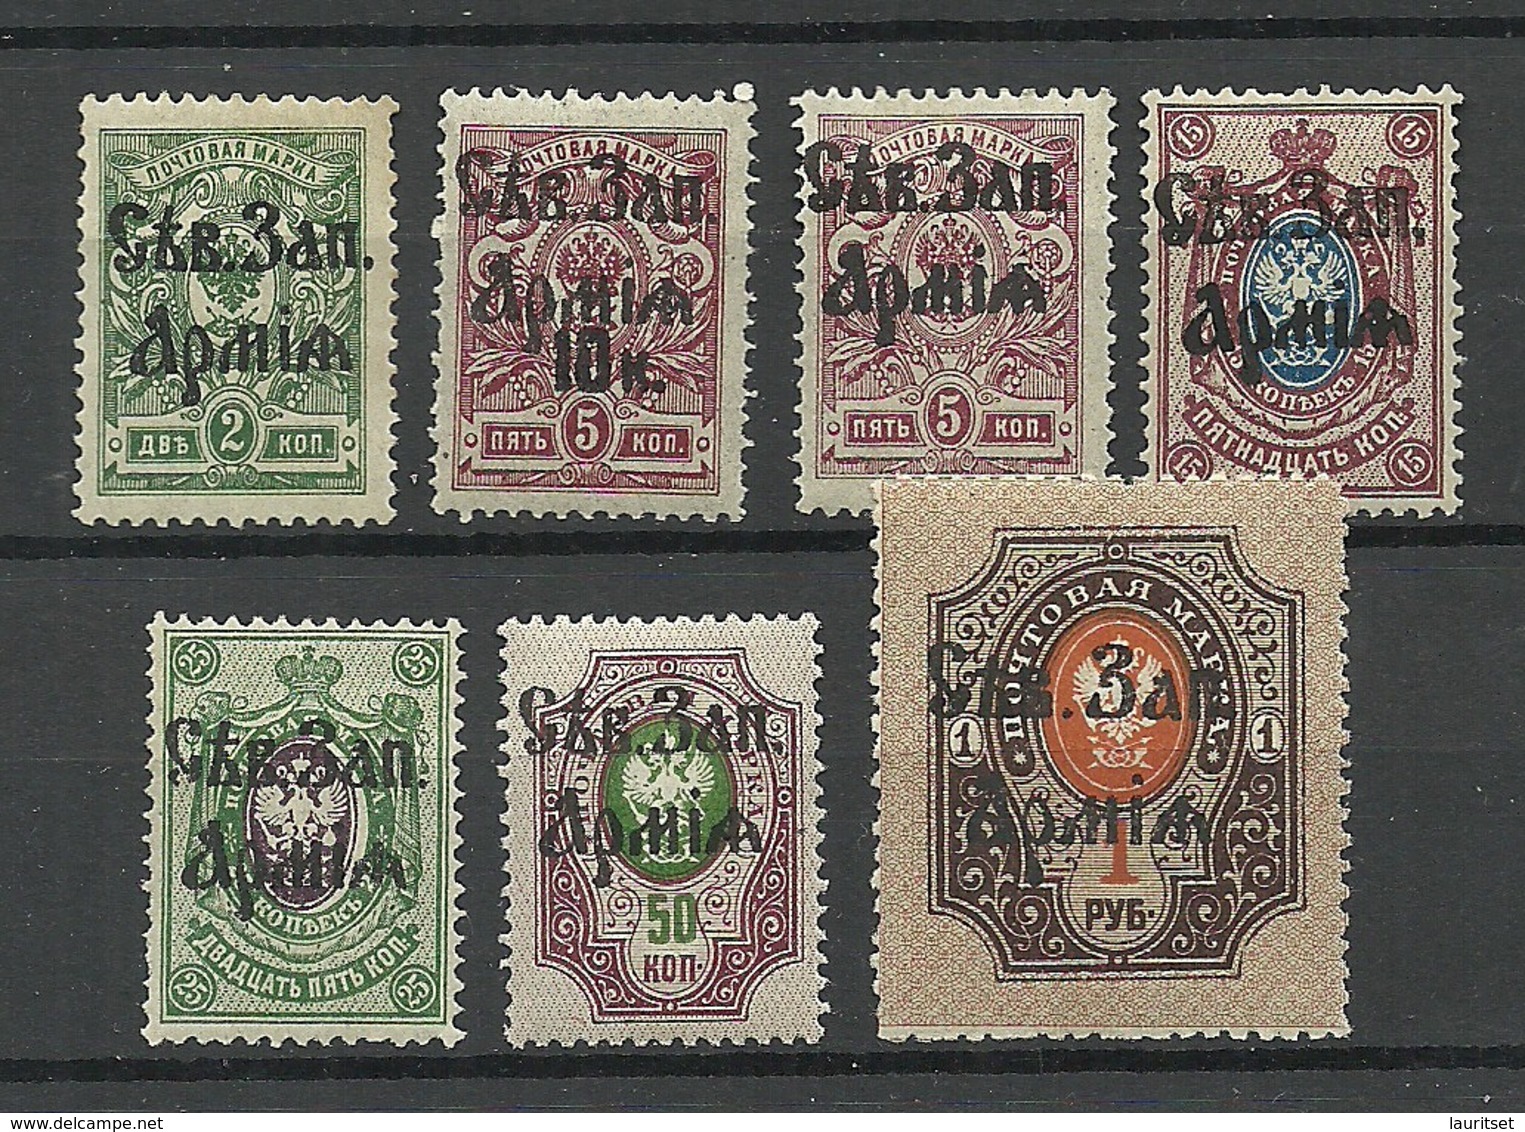 RUSSIA ESTONIA 1919 Judenich North West Army Estonian Territory, 7 Stamps, * - North-West Army